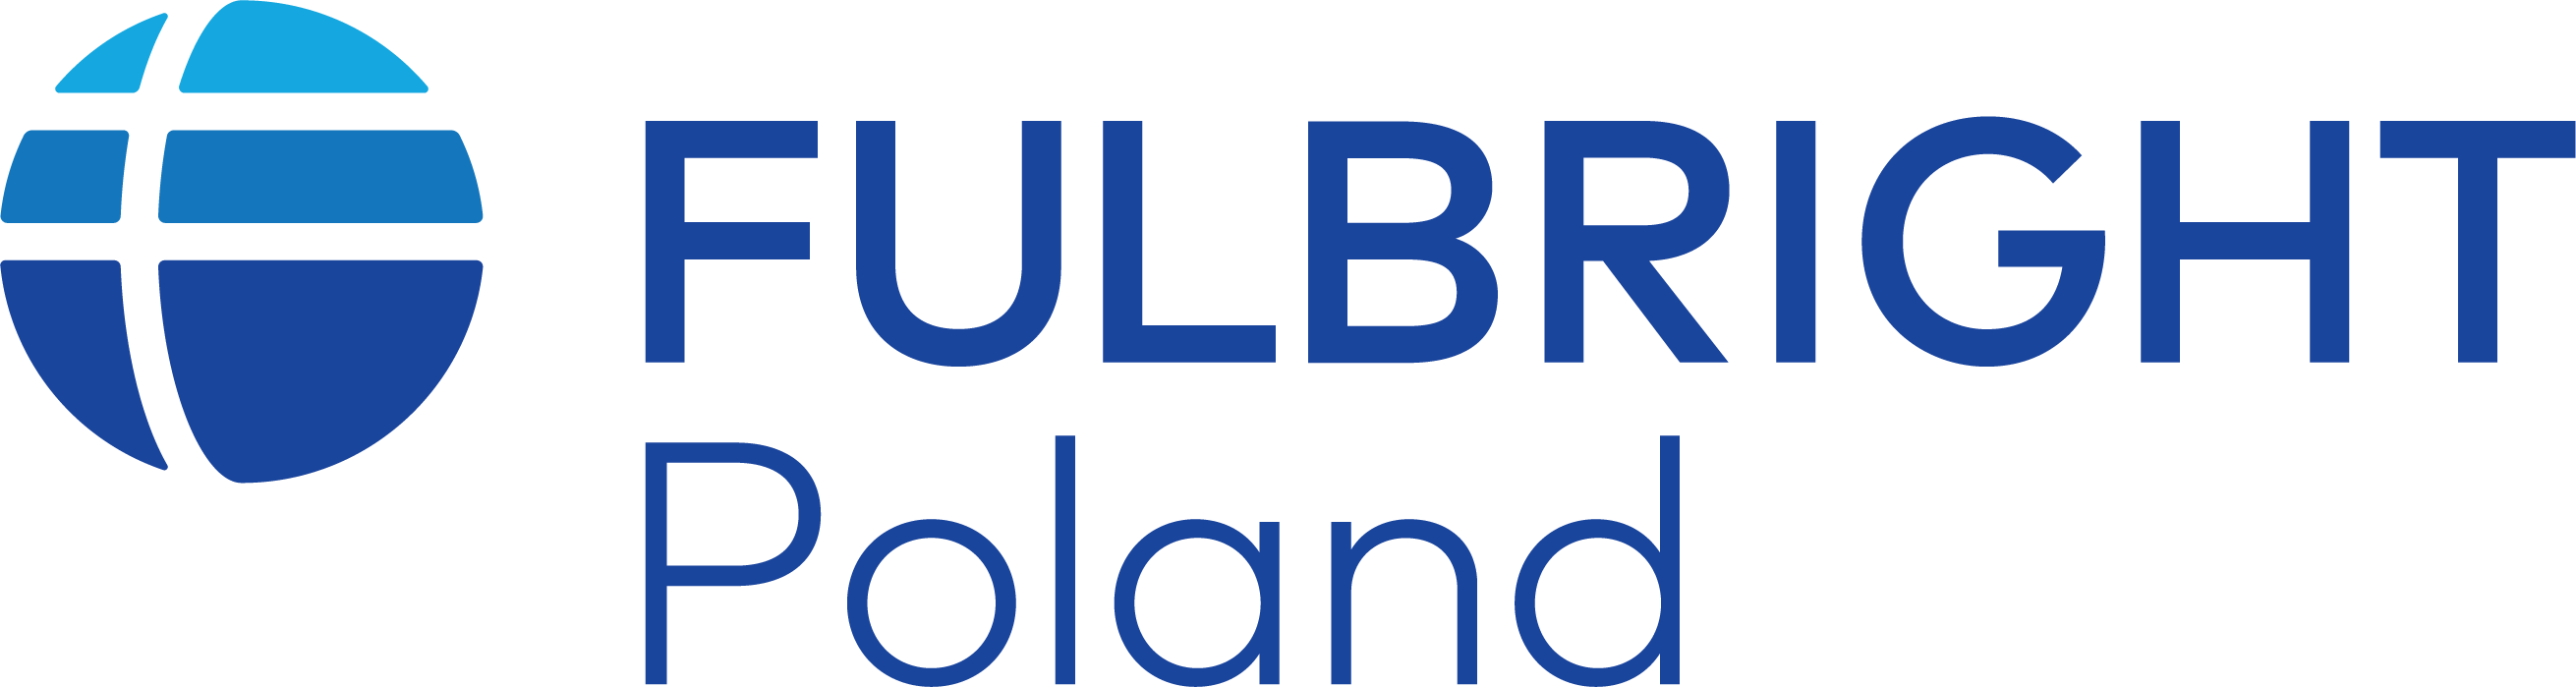 Fulbright new logo 1